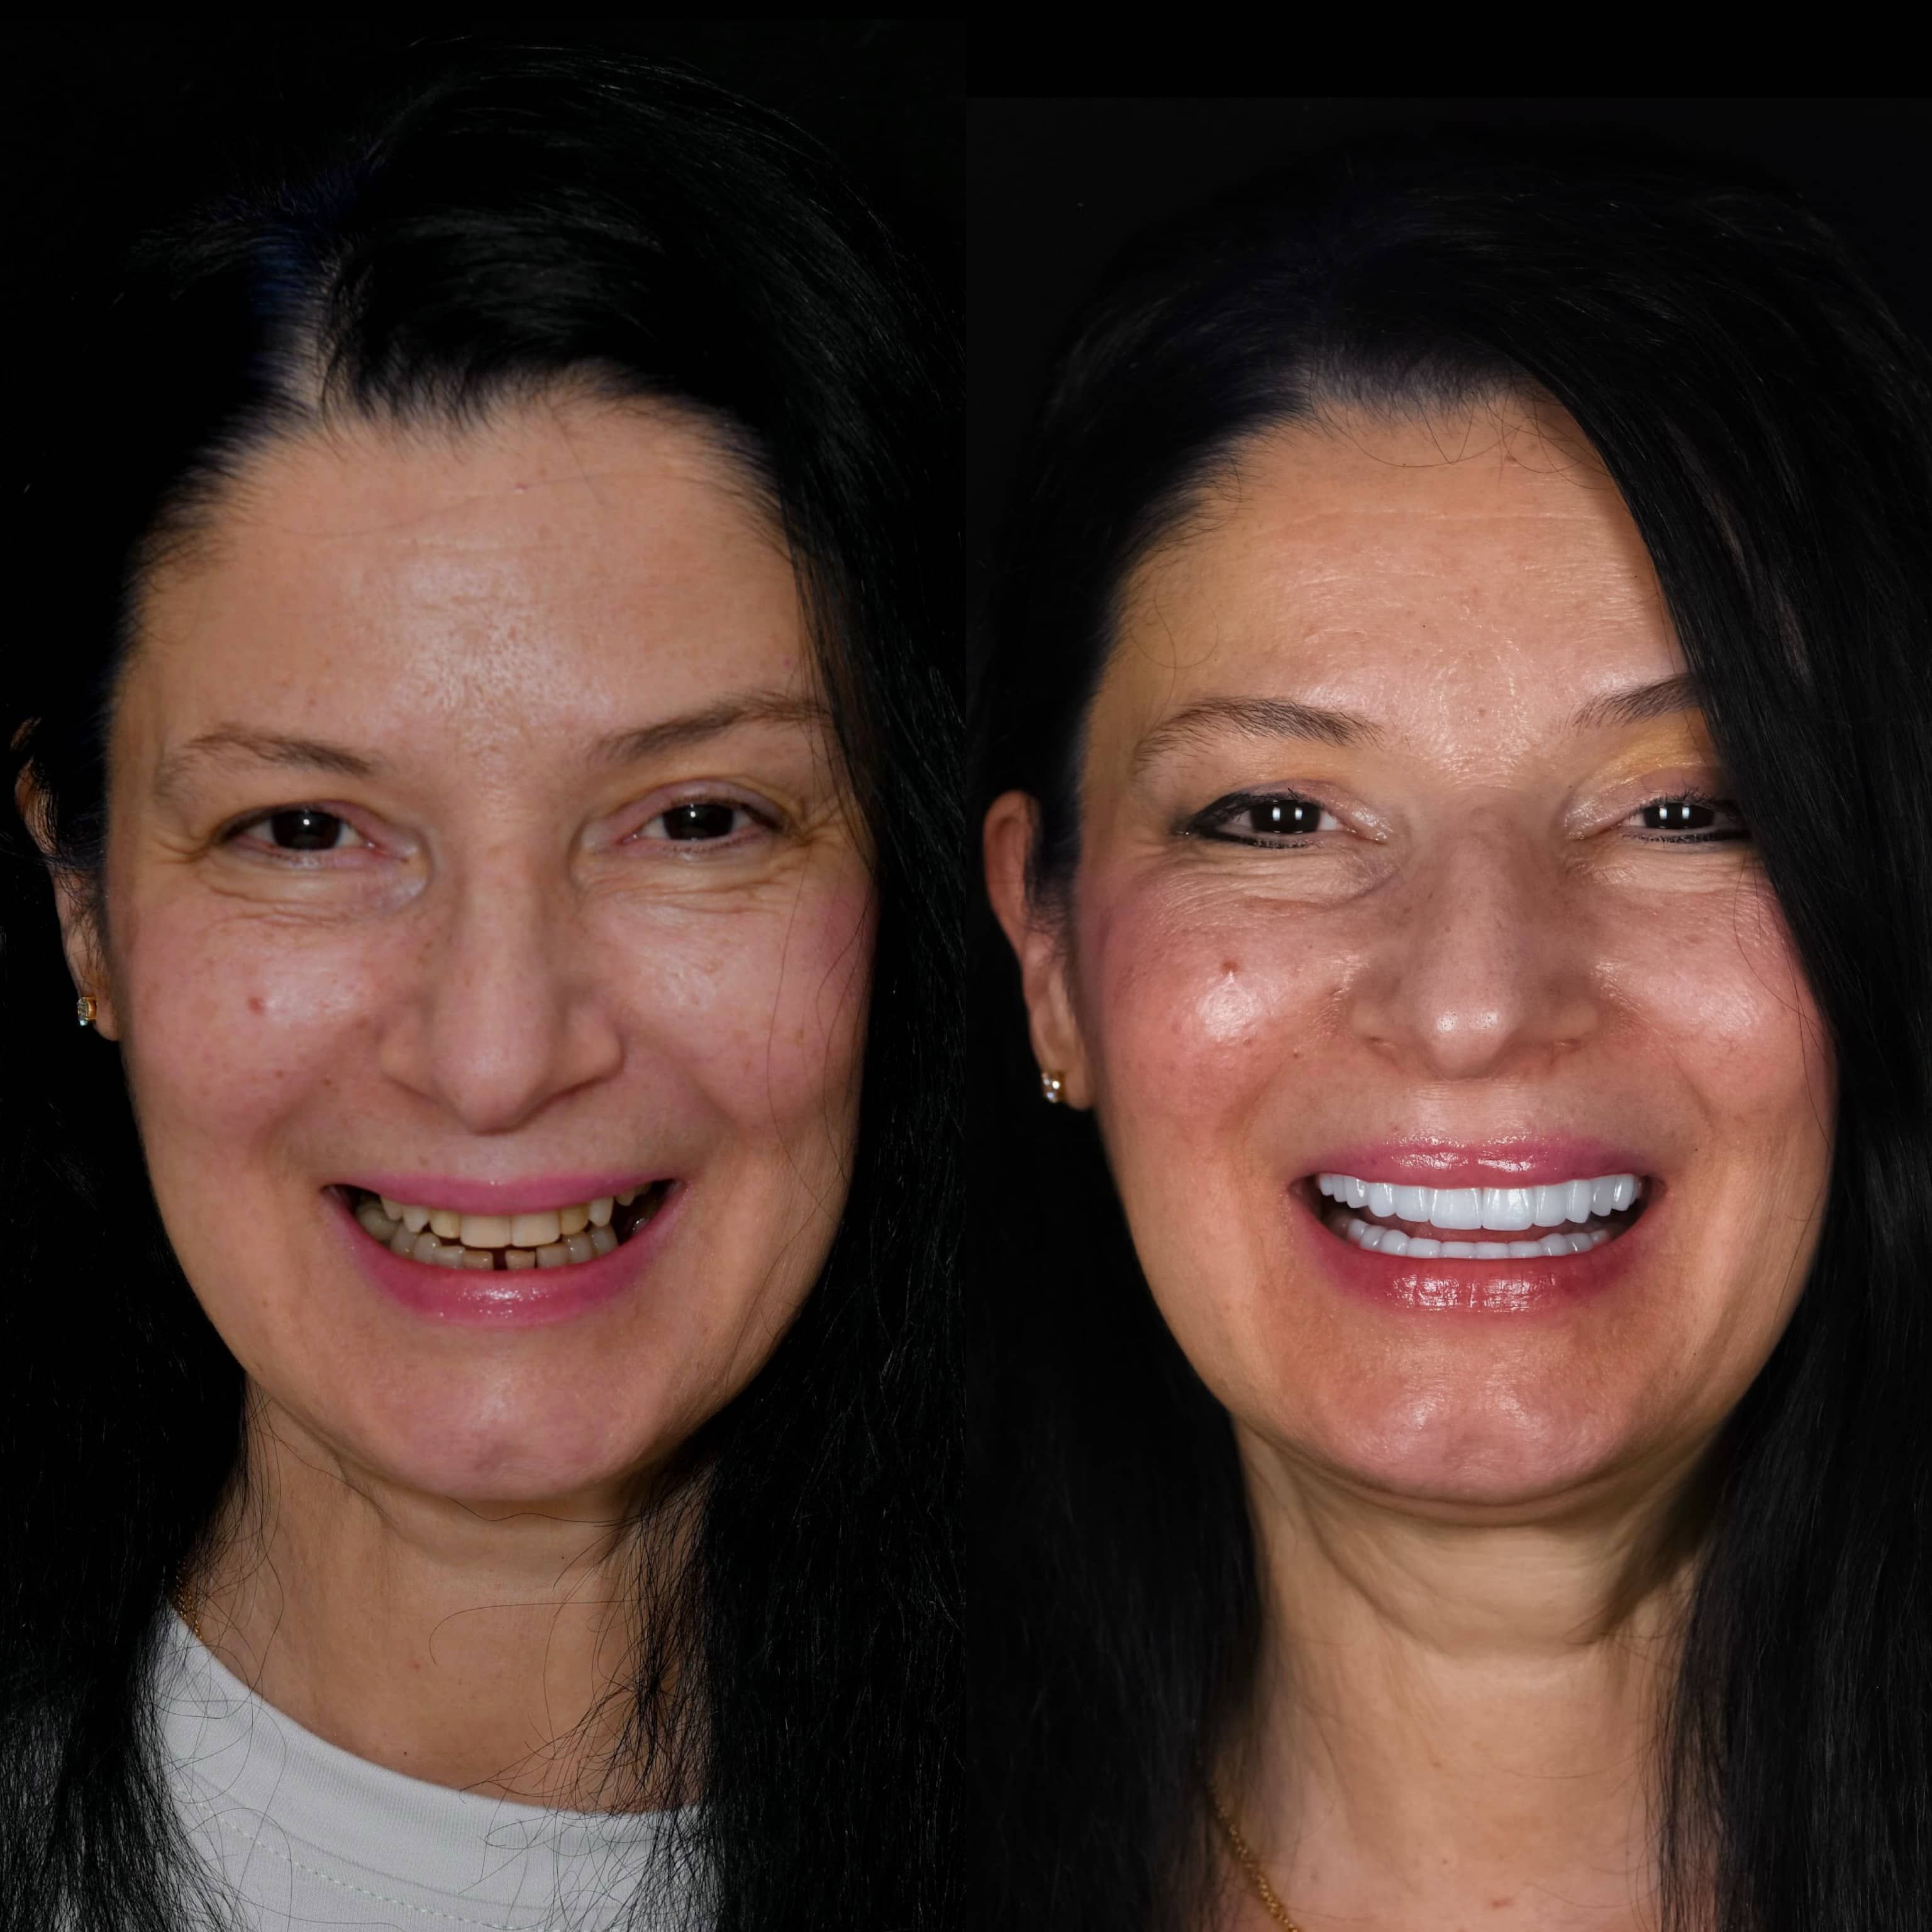 Before and after of veneers procedure by Los Angeles dentist